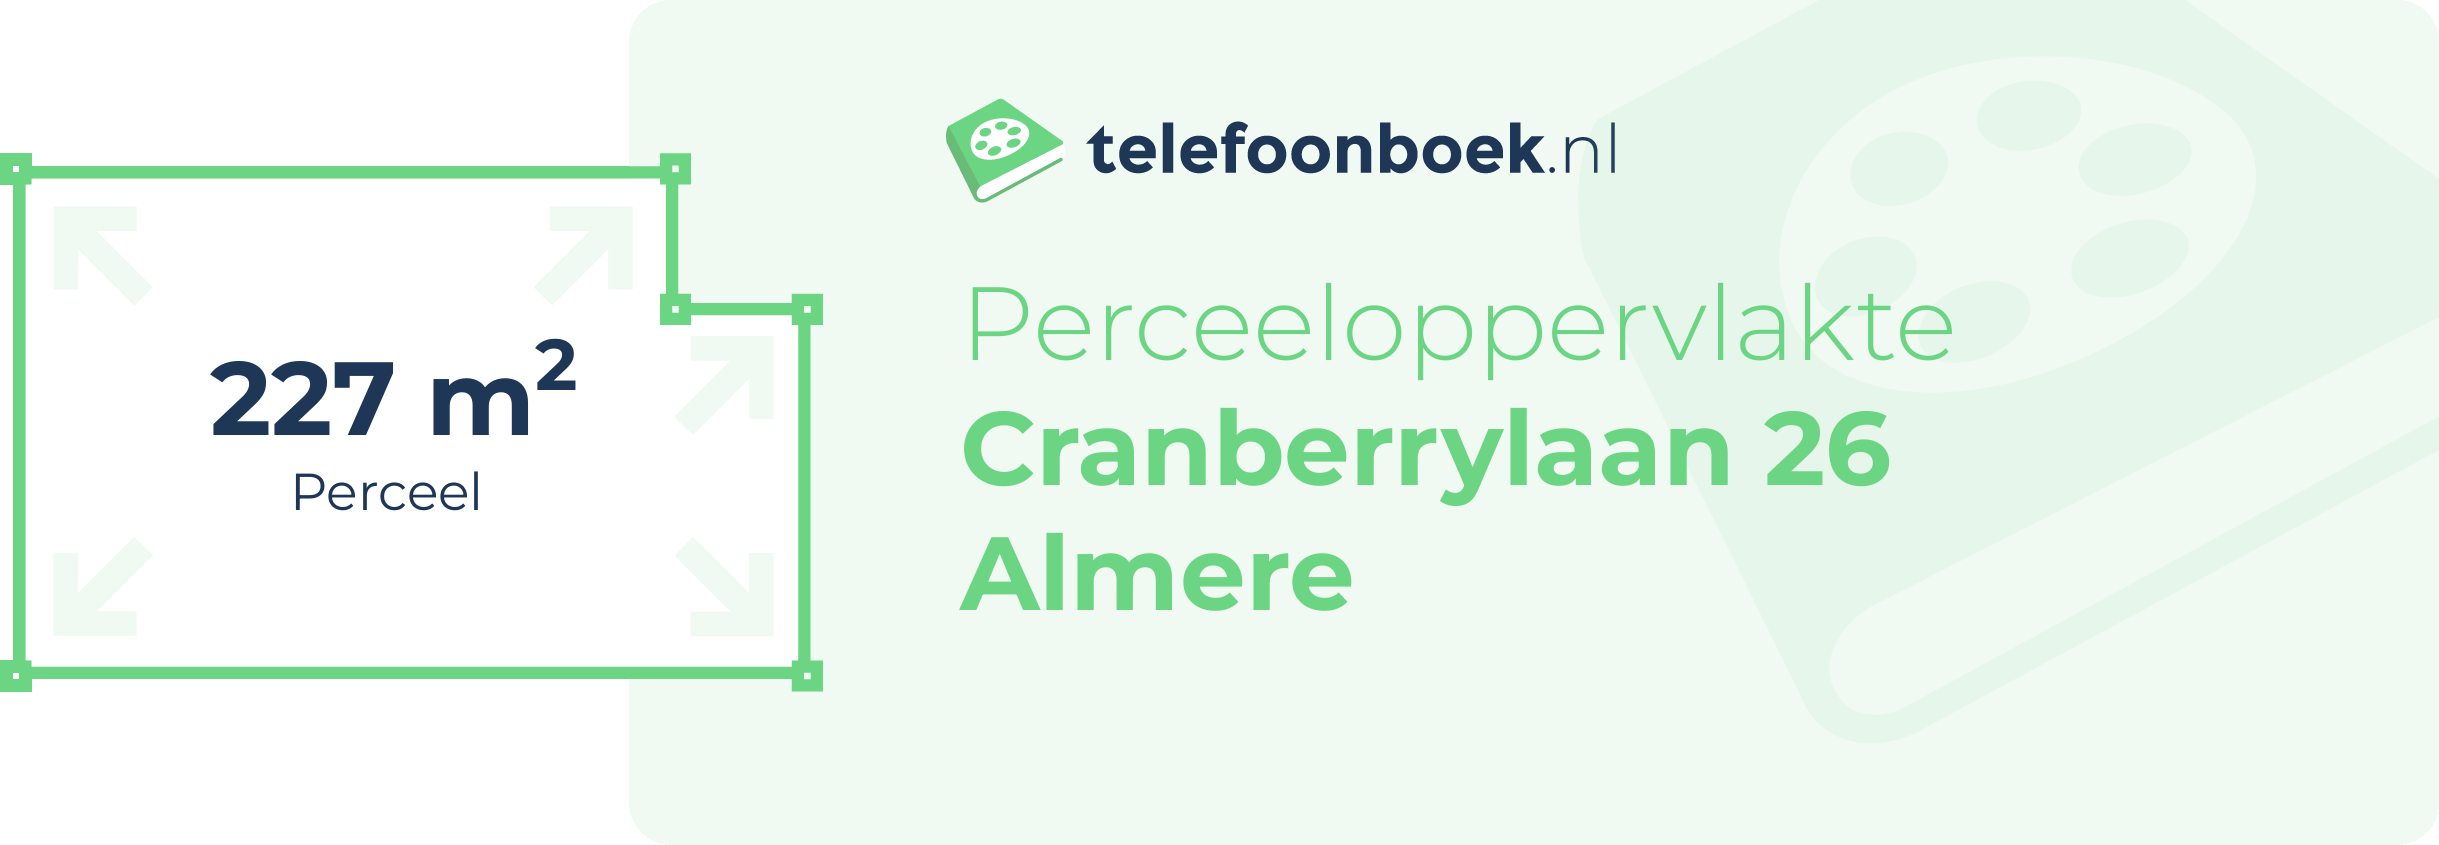 Perceeloppervlakte Cranberrylaan 26 Almere